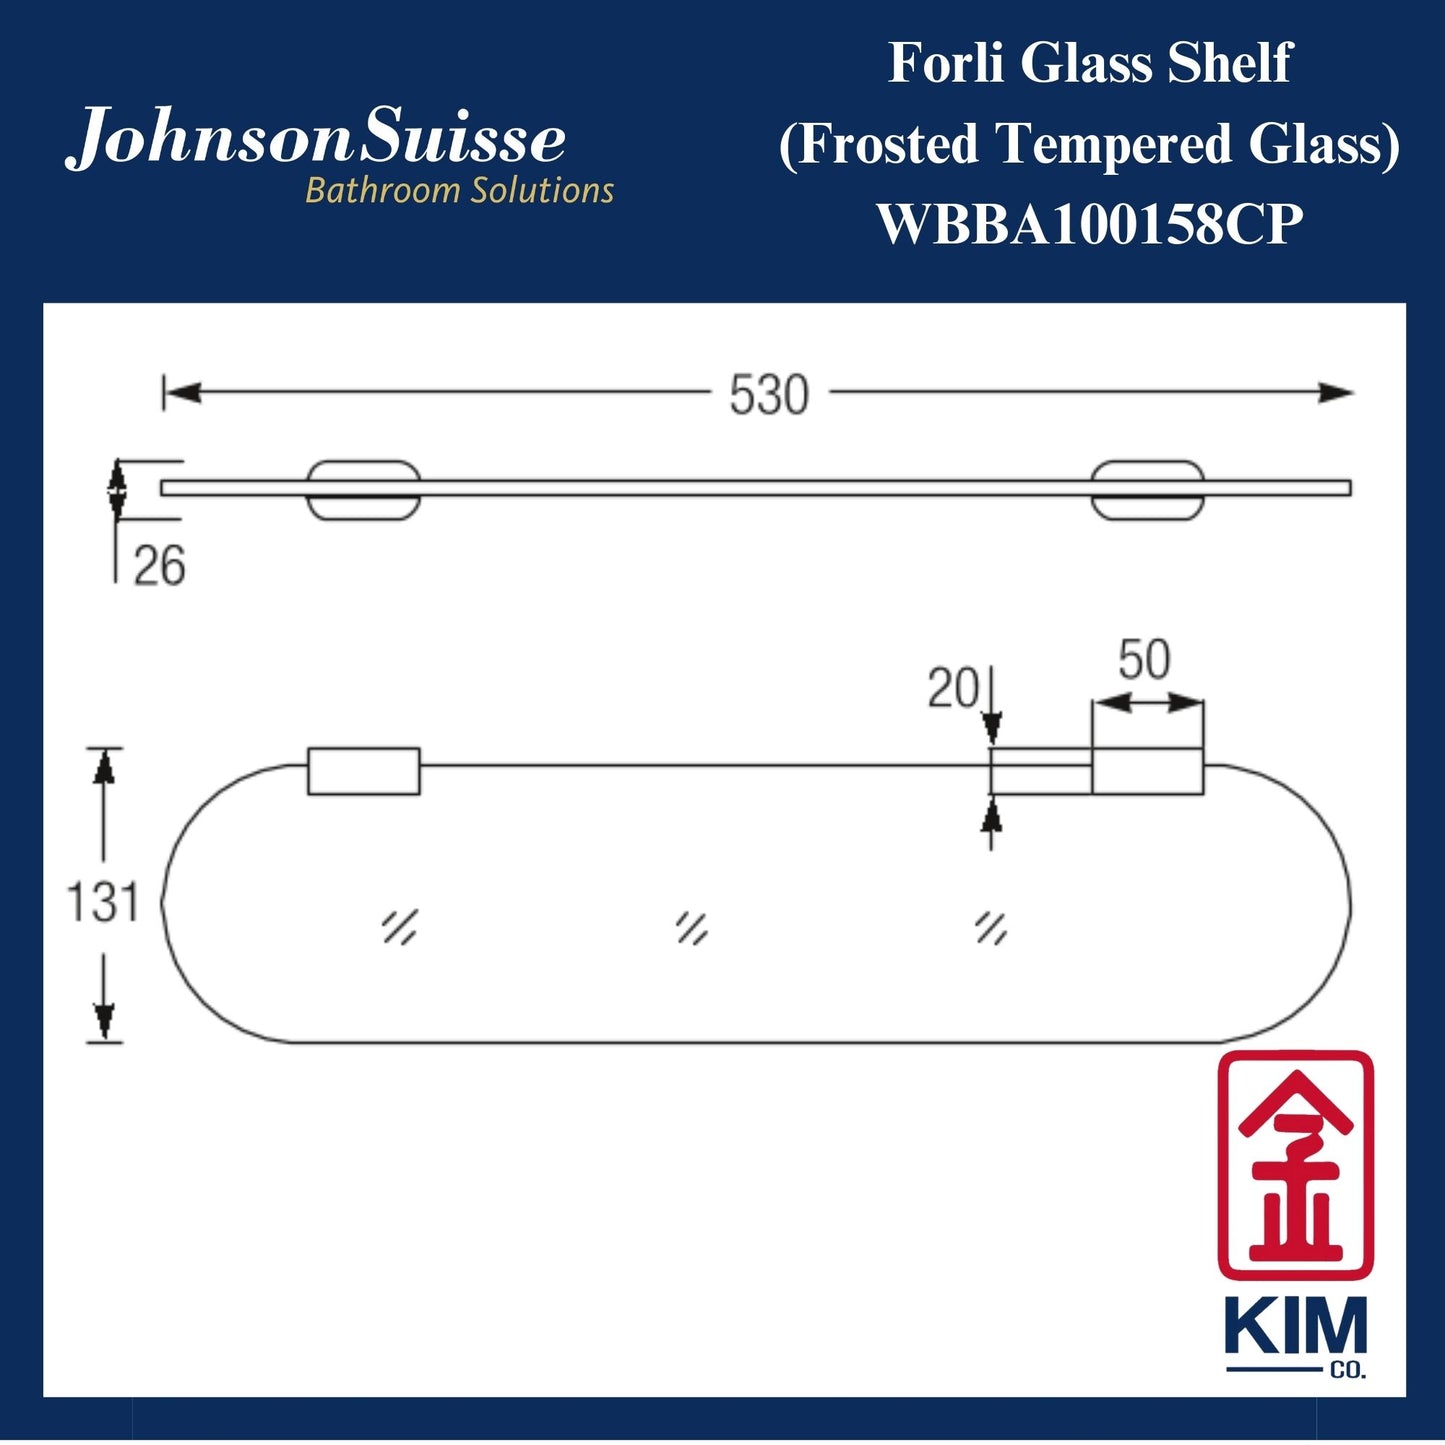 Johnson Suisse Forli Glass Shelf (WBBA100158CP)